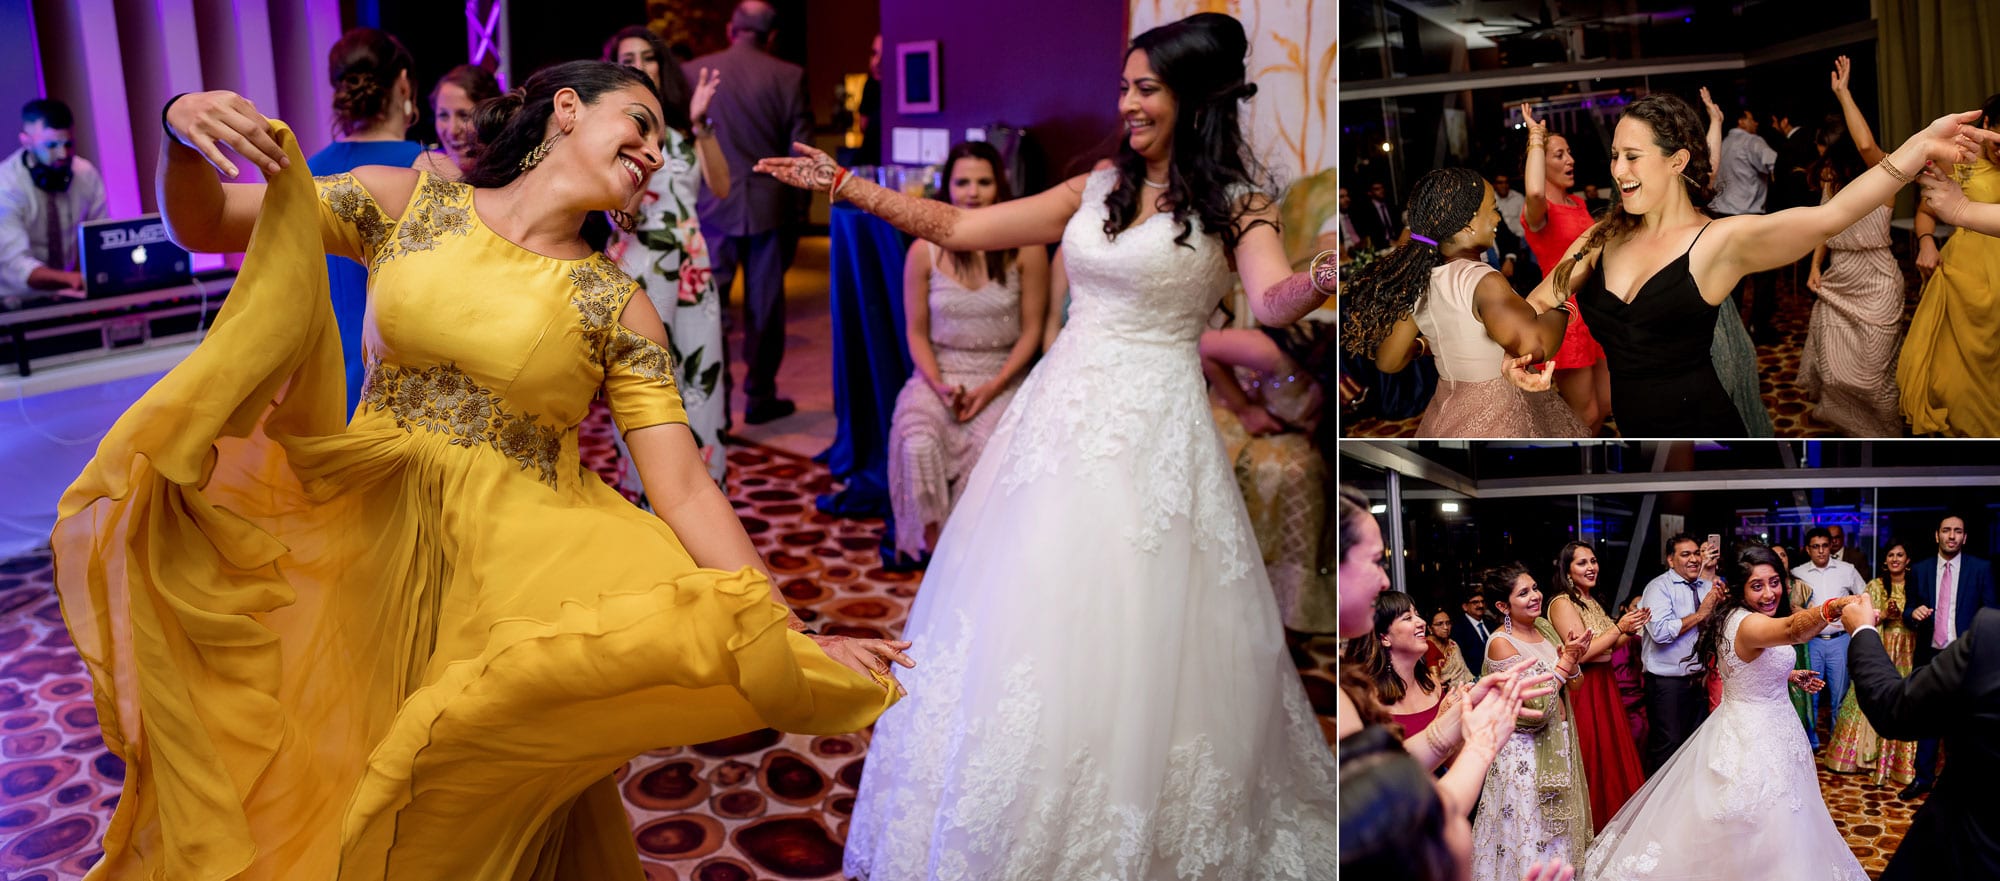 Dancing at the Hindu Muslim wedding reception